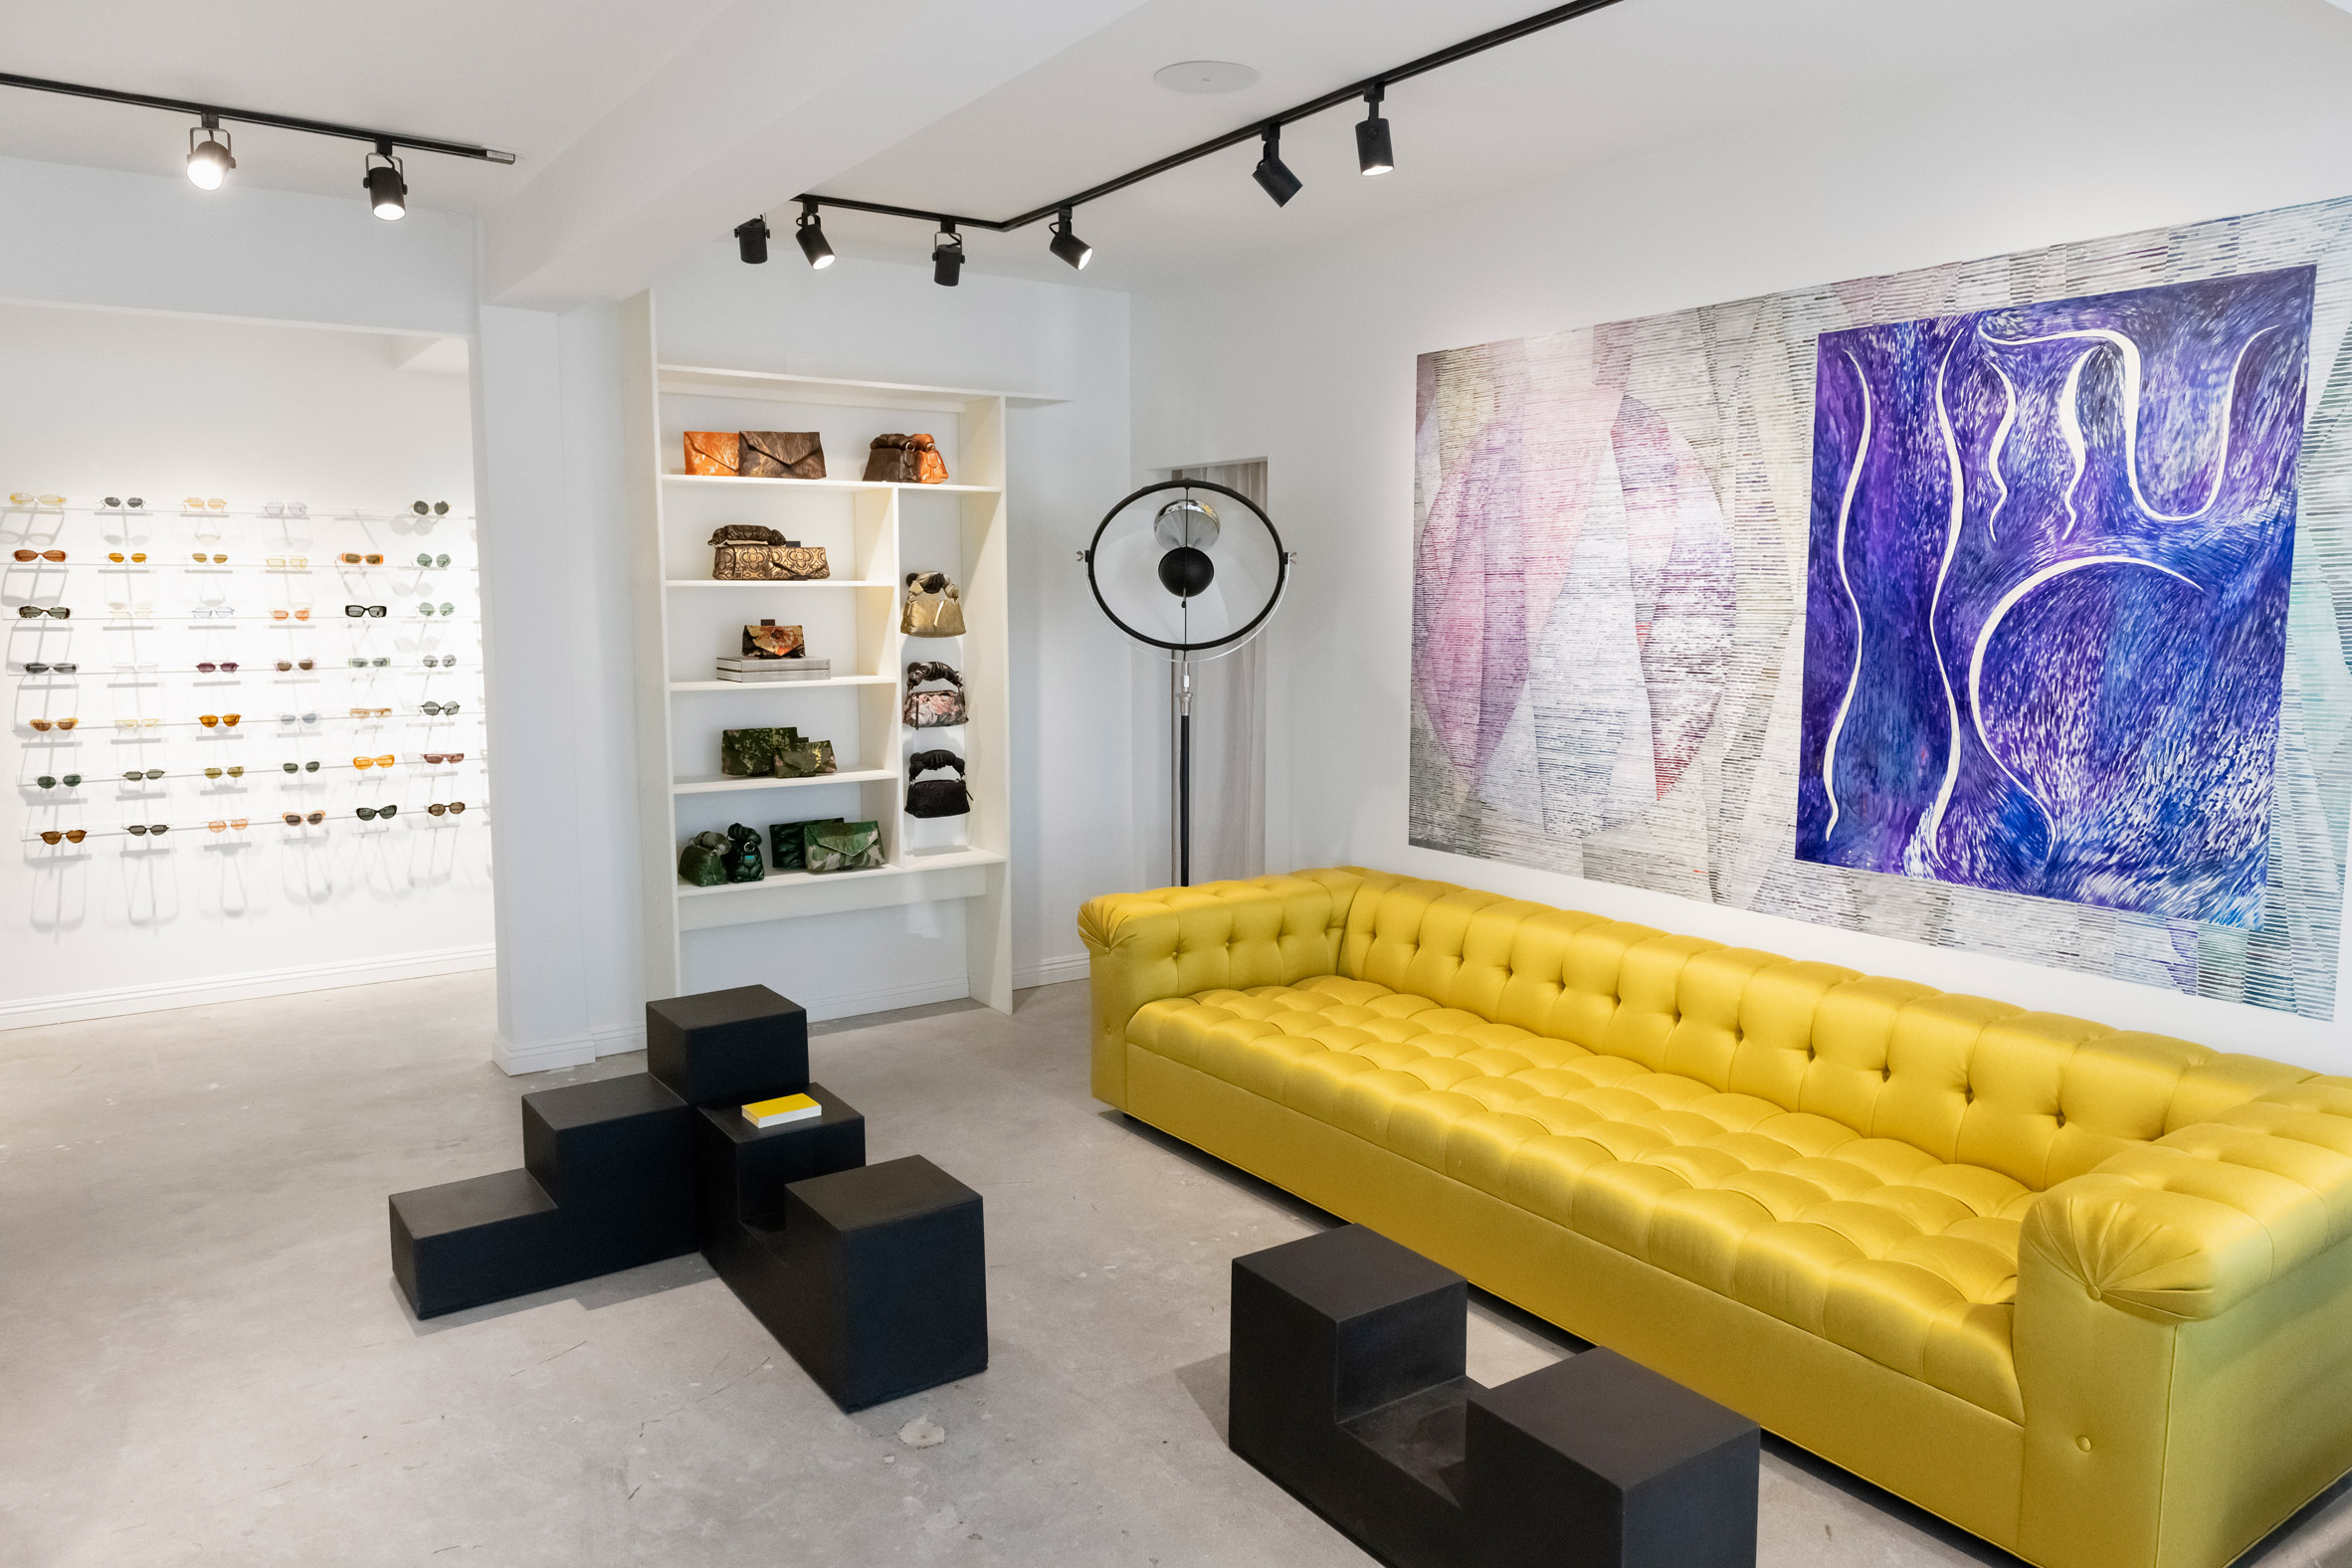 Fashion meets art inside Dries Van Noten's inaugural US store